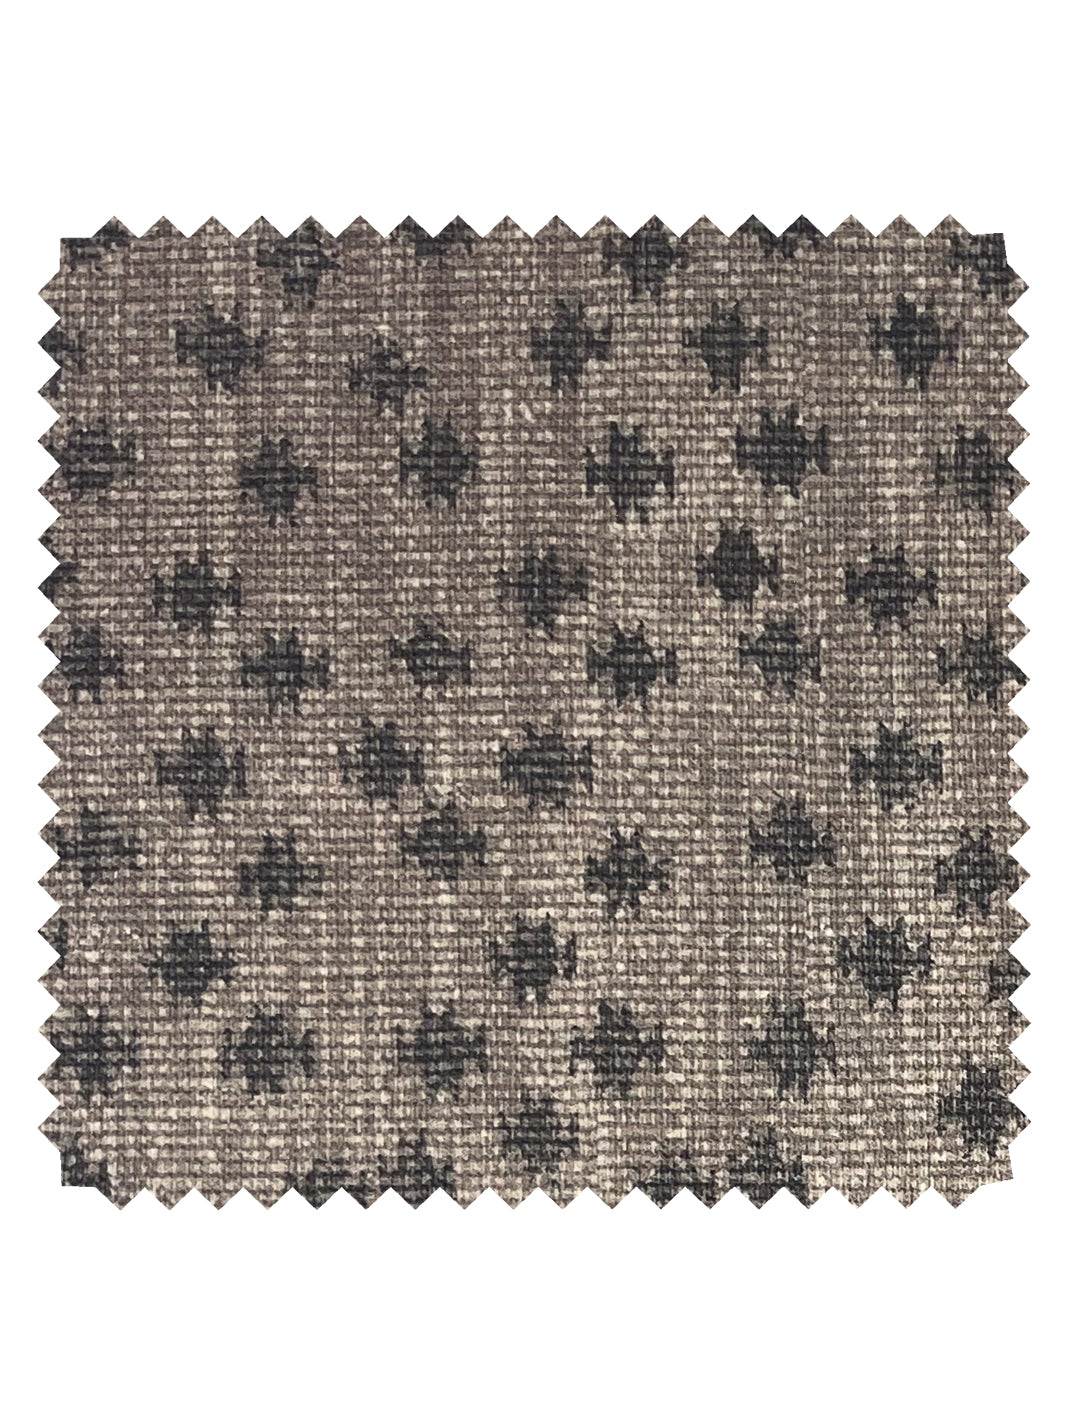 &#39;Northstar Star&#39; Linen Fabric - Dark Brown